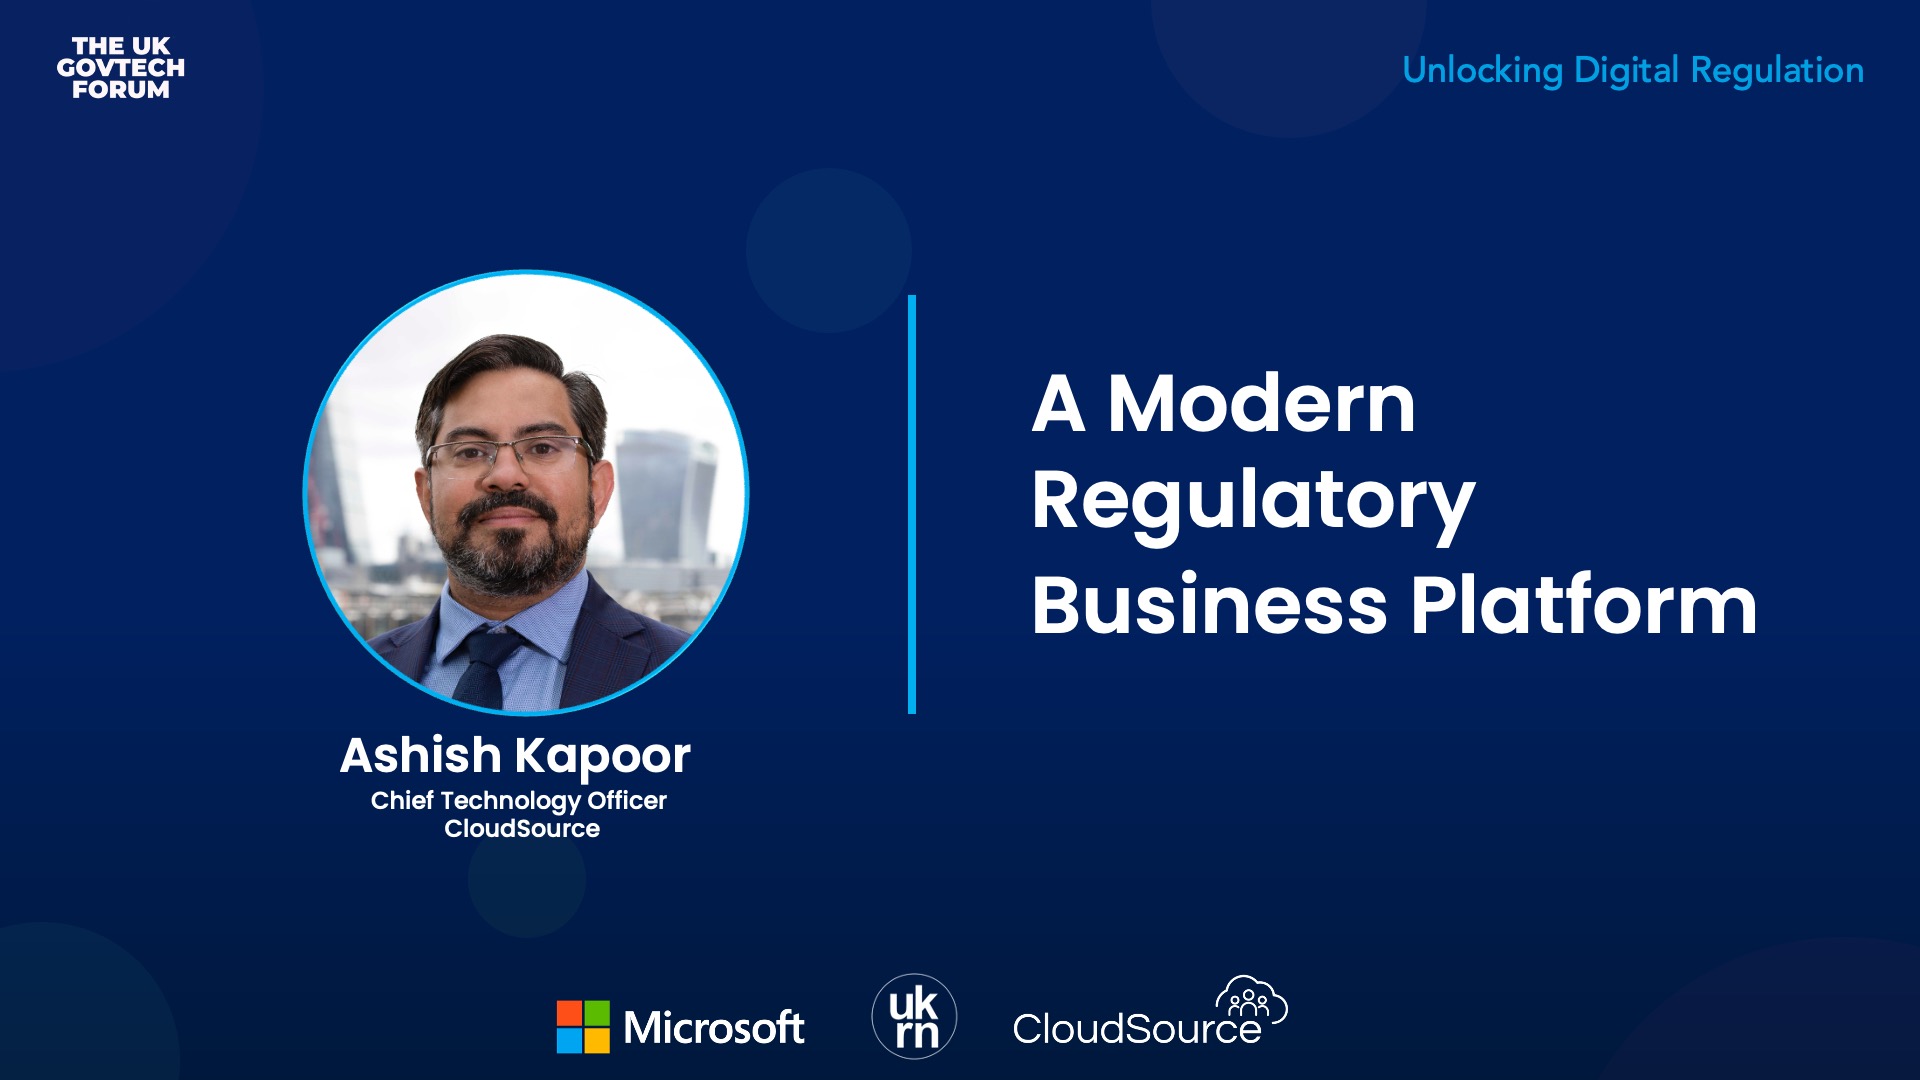 The Modern Regulatory Business Platform